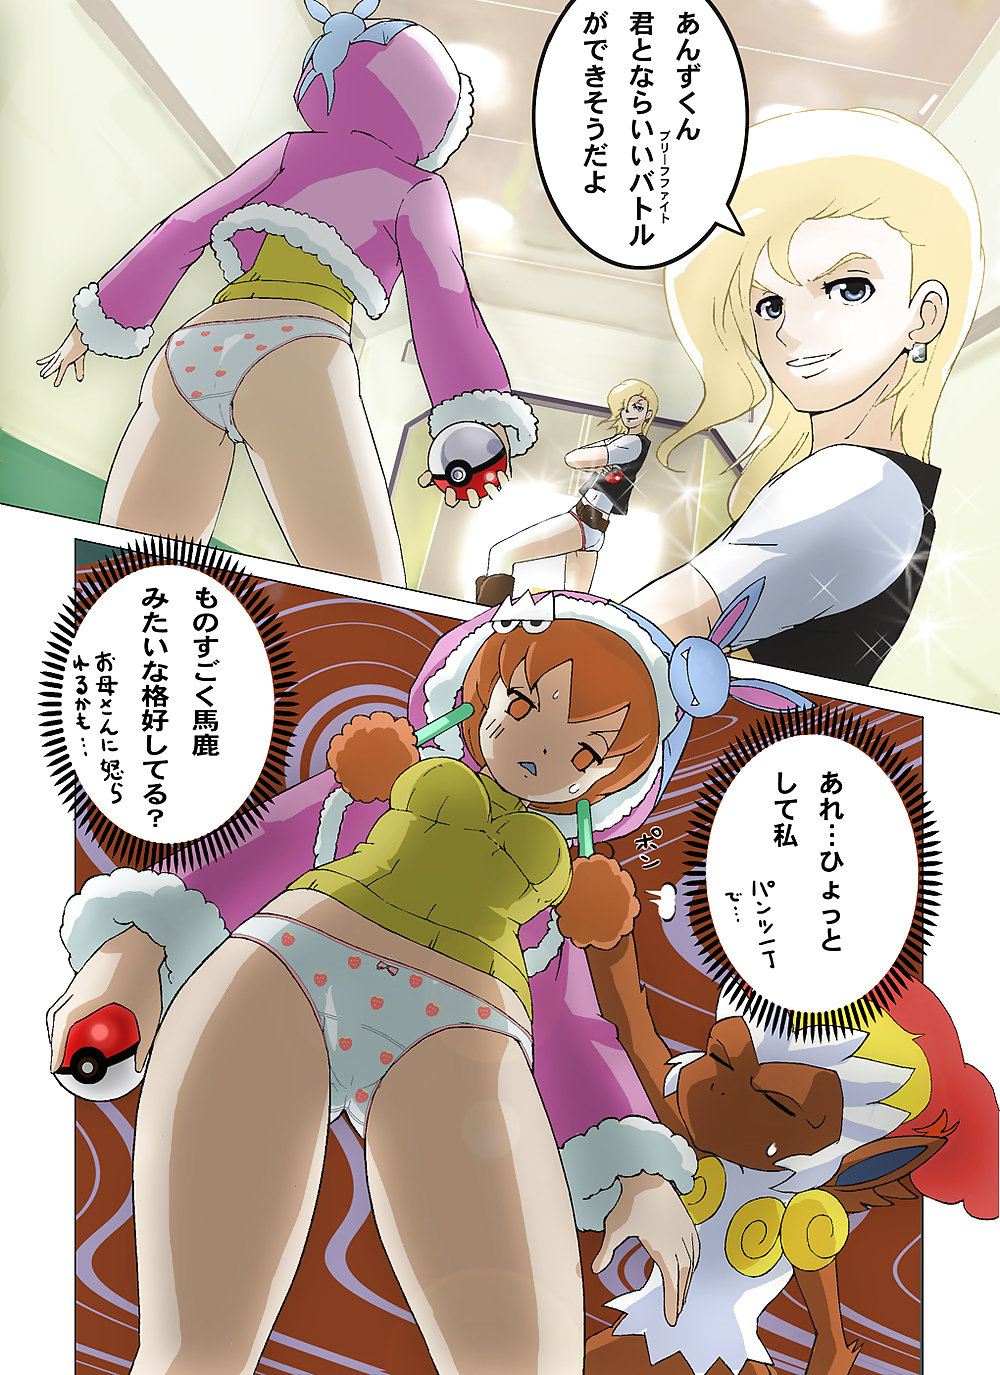 Anime-Manga-Hentai Images Vol 3: Pokemon. #5891219